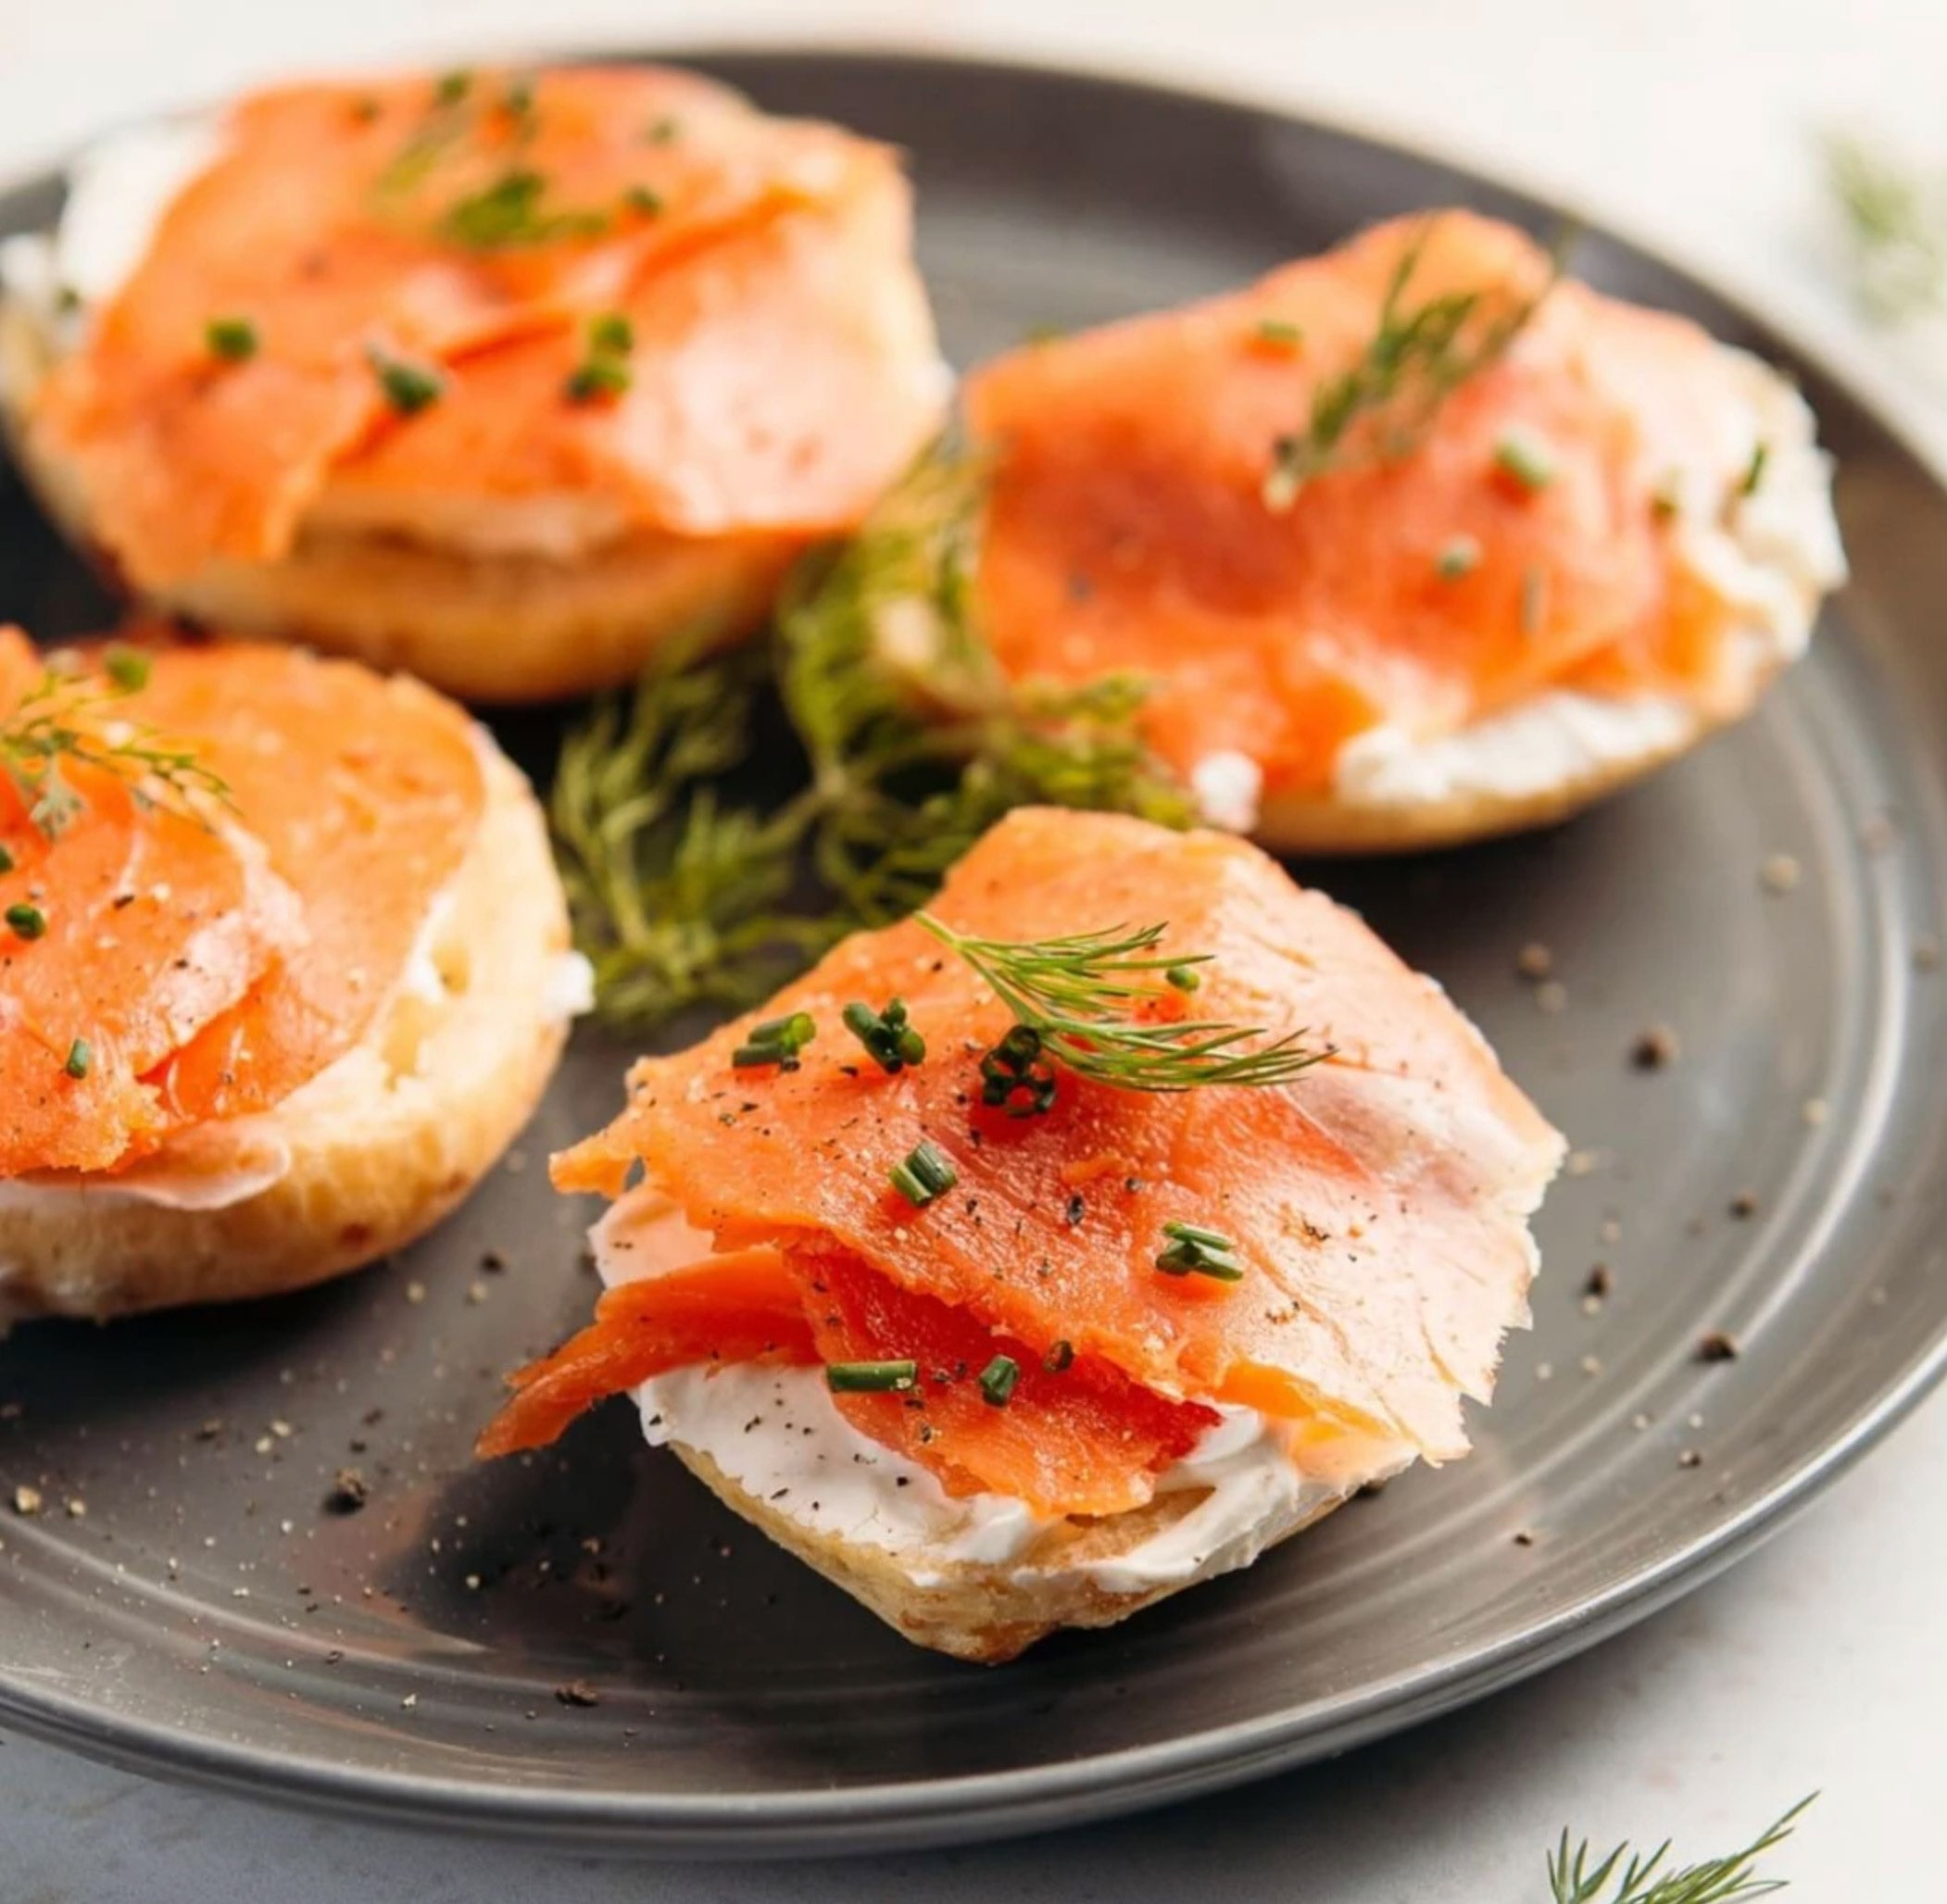 Recipe: Smoked Salmon & Cream Cheese Sandwich with a Cheese Bread Bun